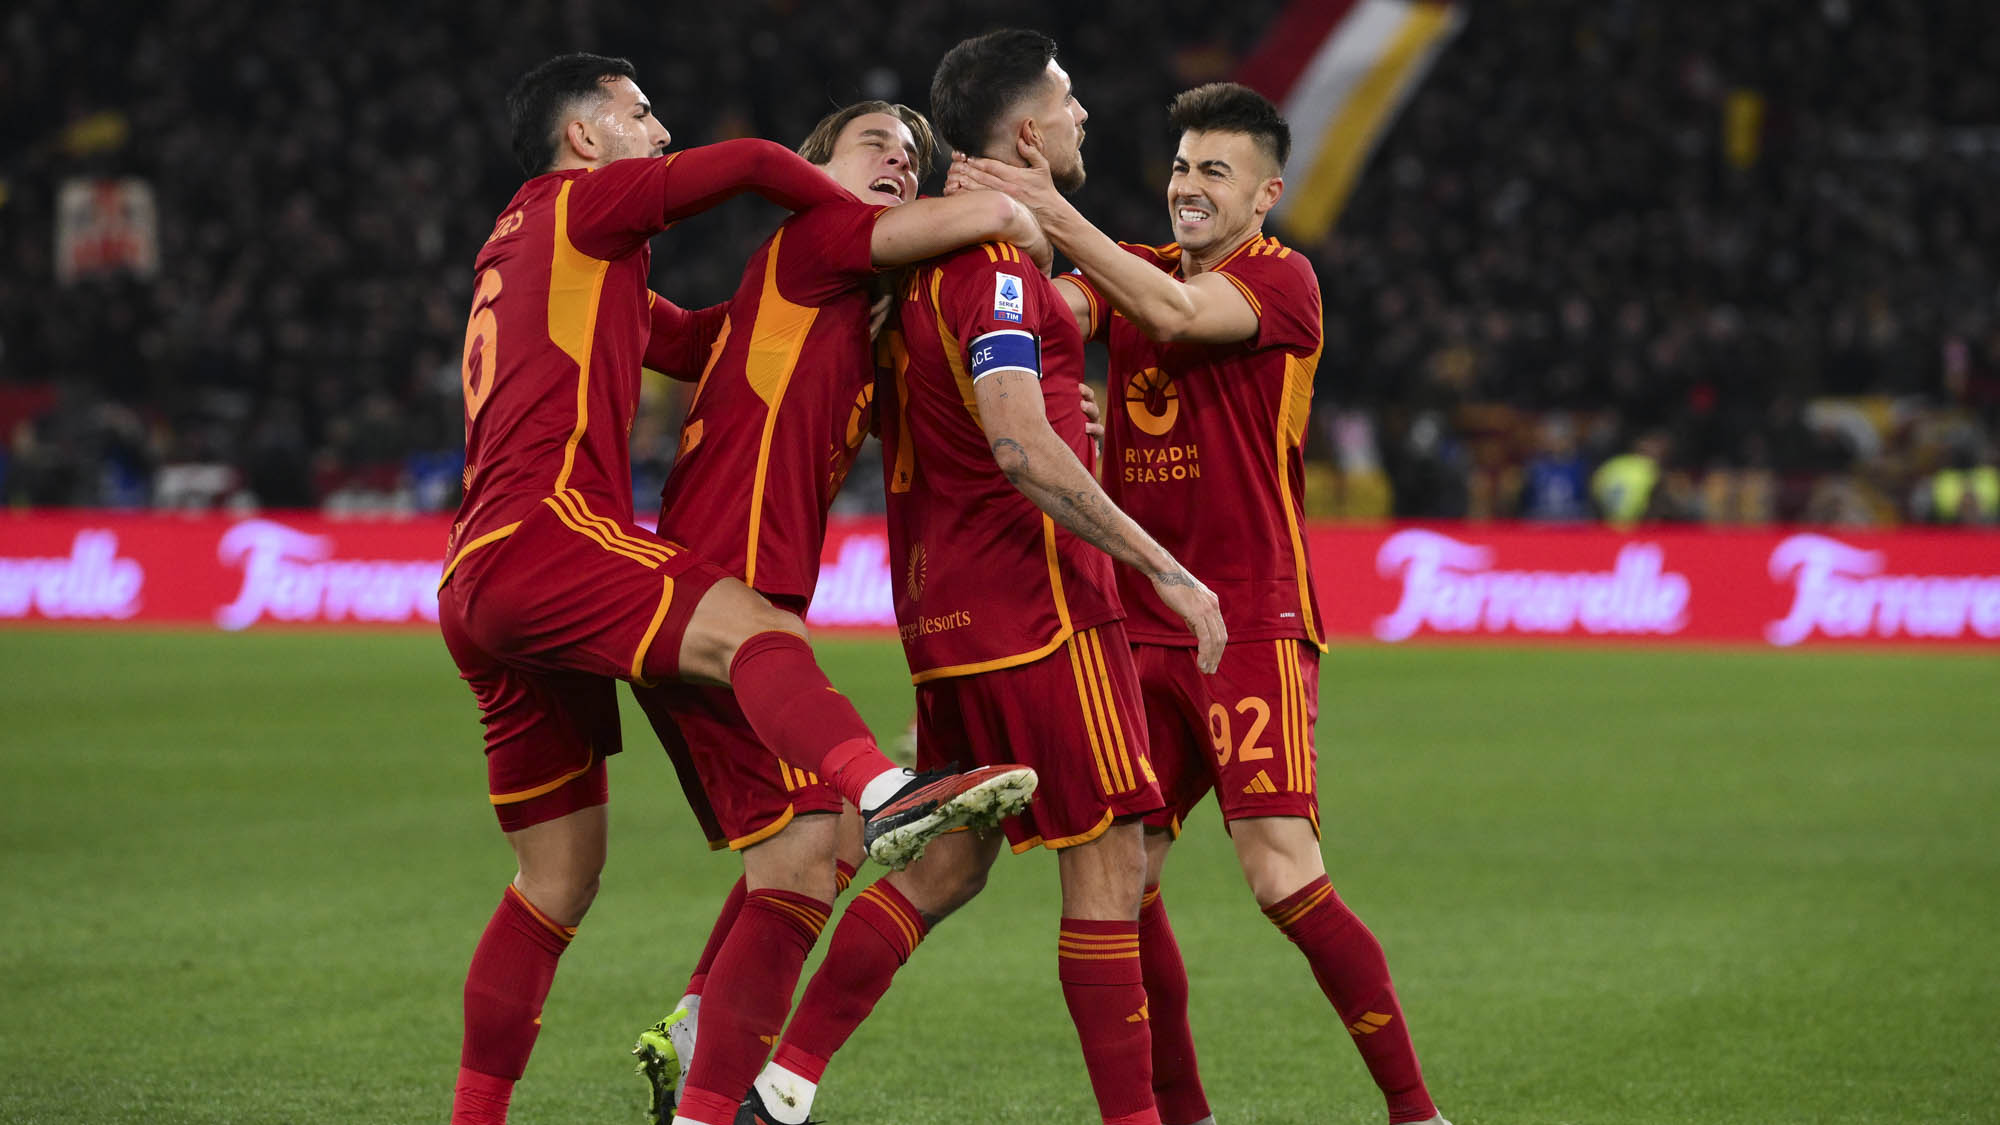 AS Roma vs Vérone 2-1, première victoire sans Mourinho